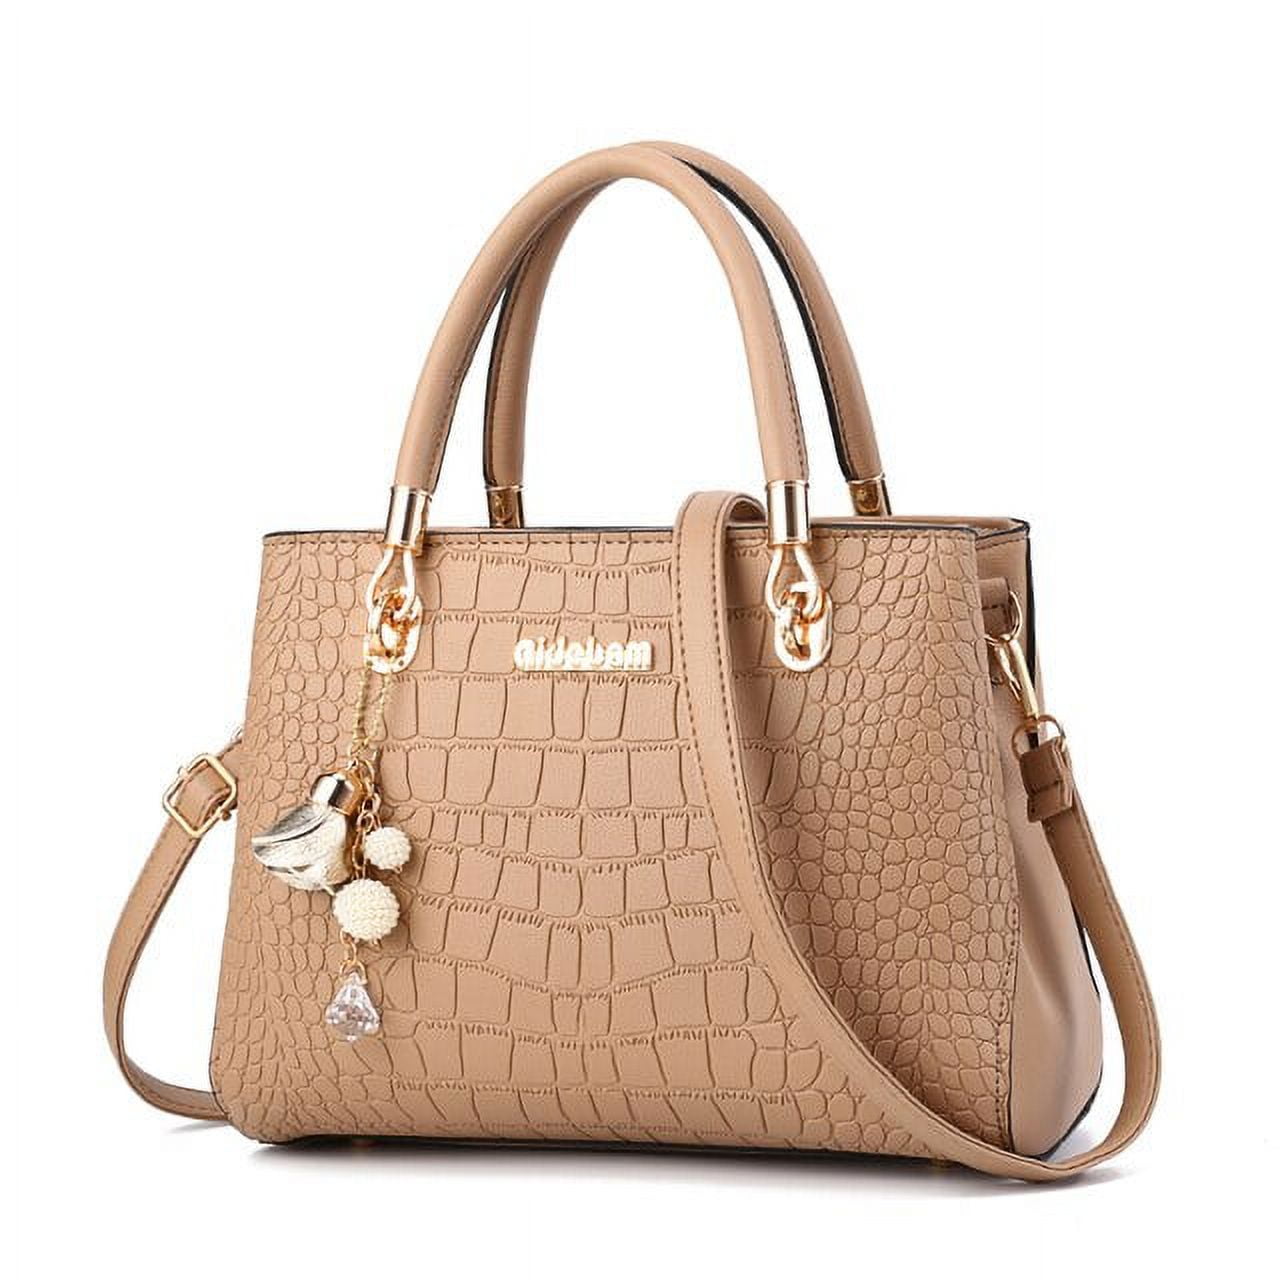 CoCopeaunt Luxury Handbags Women Bags Designer PU Leather Floral